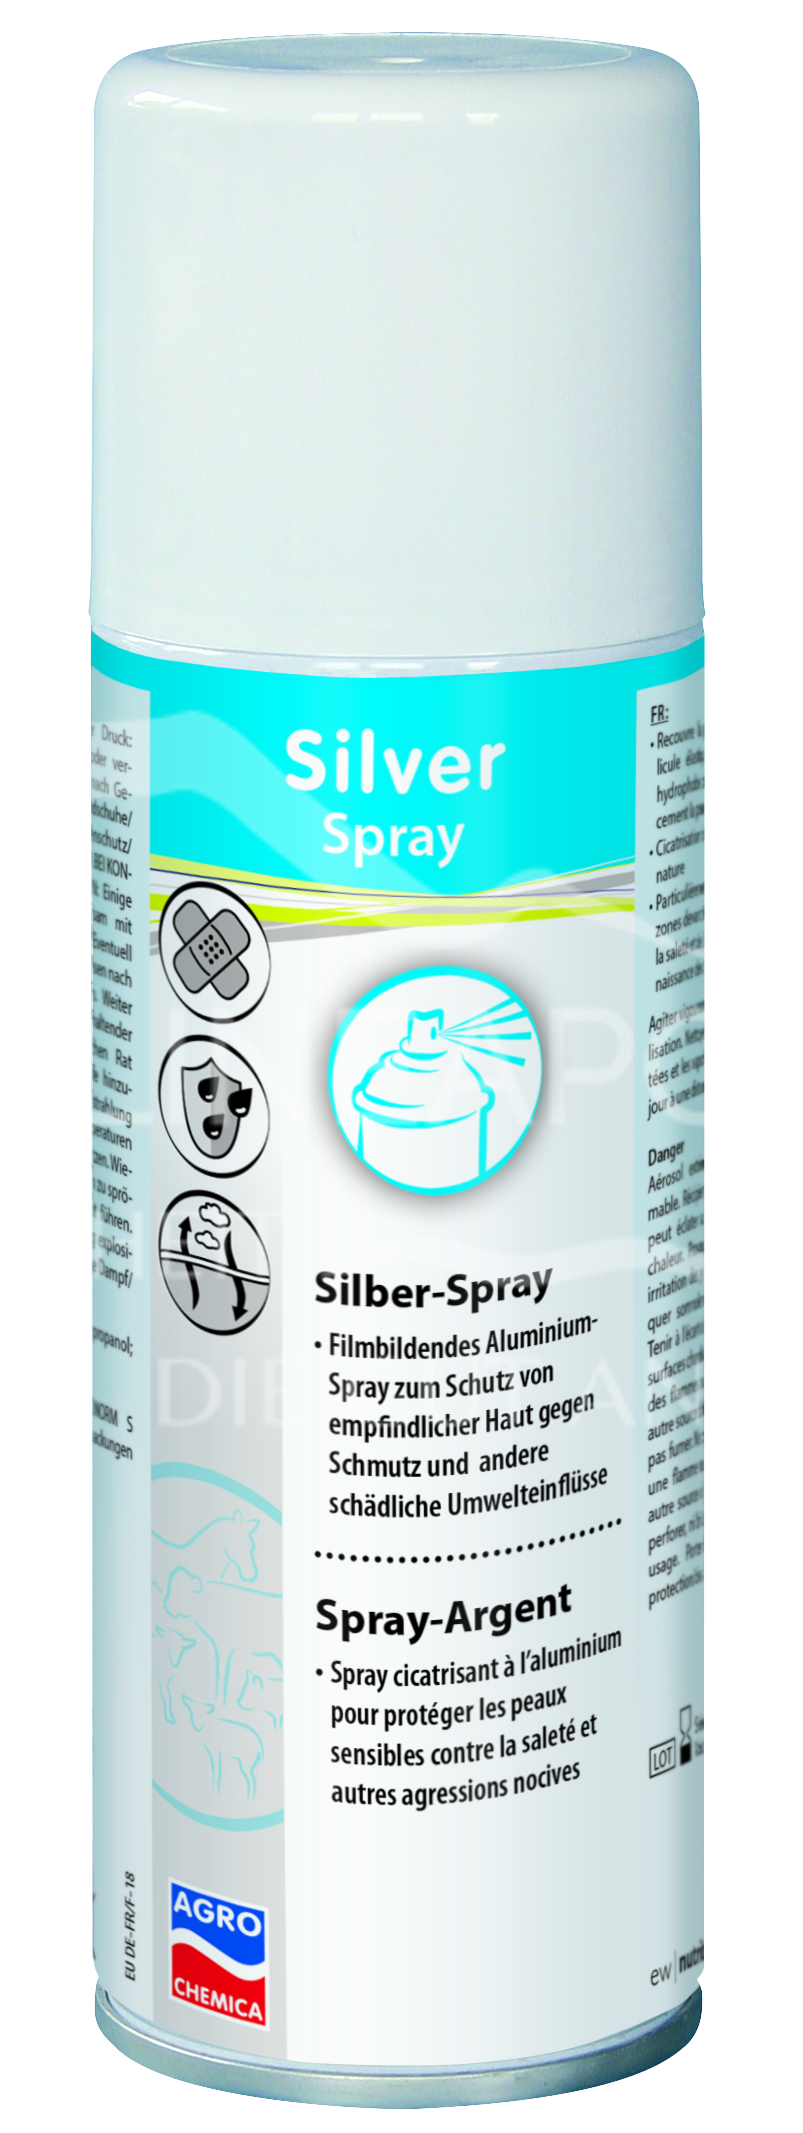 Agrochemica Aloxan® Silver-Spray